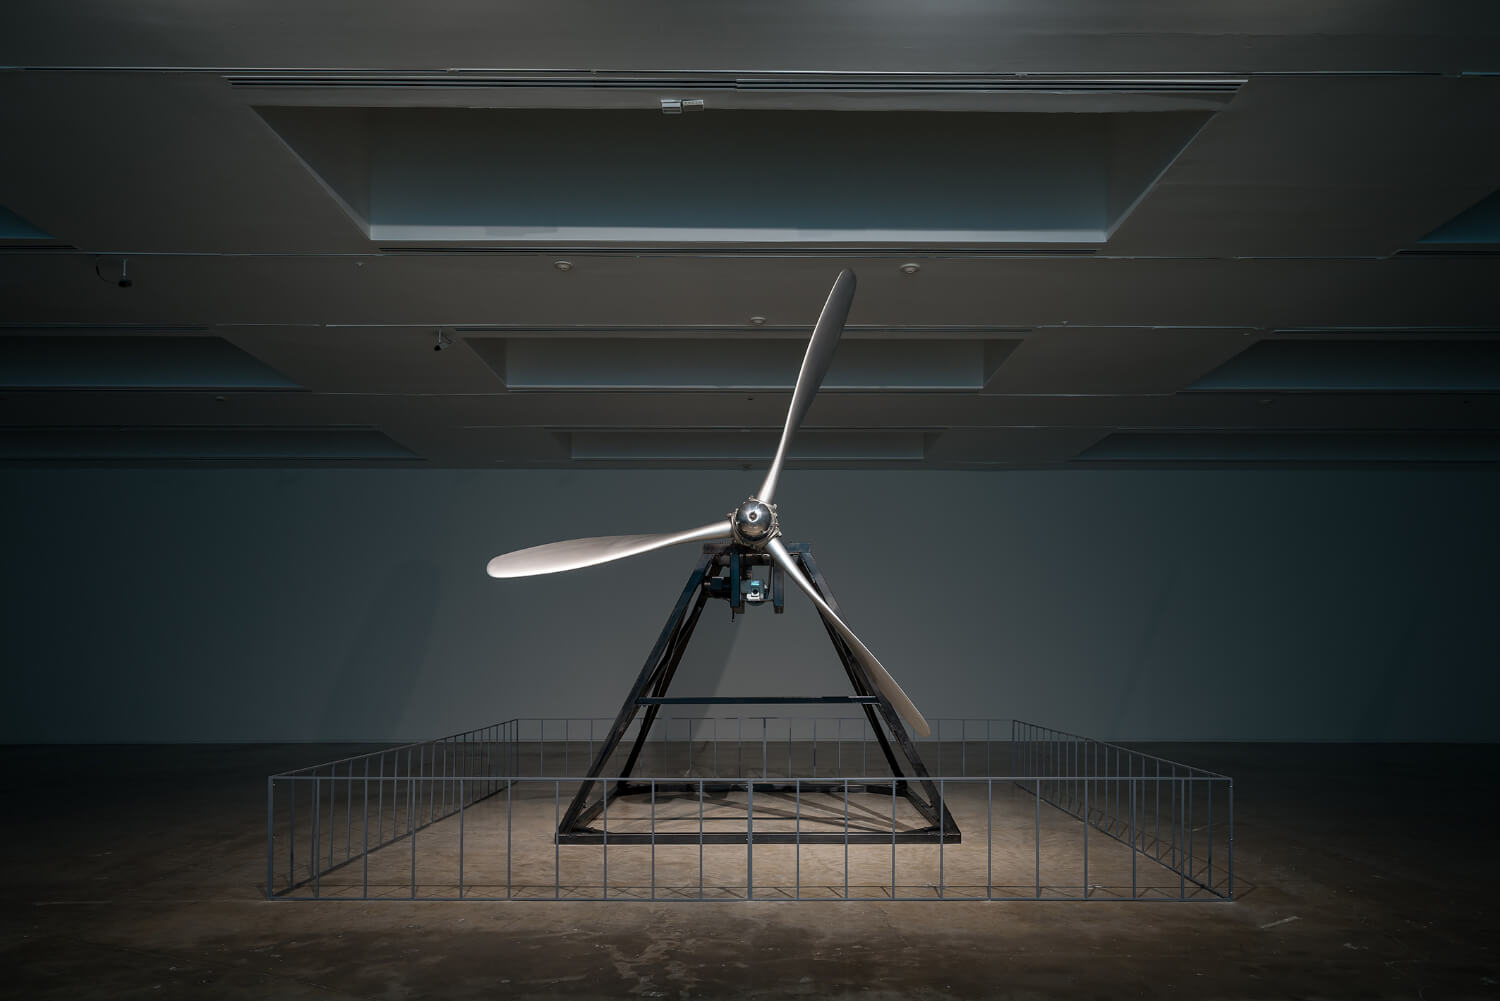  Dodo, Fundación Jumex Arte Contemporáneo, Installation view, 2014 Image © Moritz Bernoully 